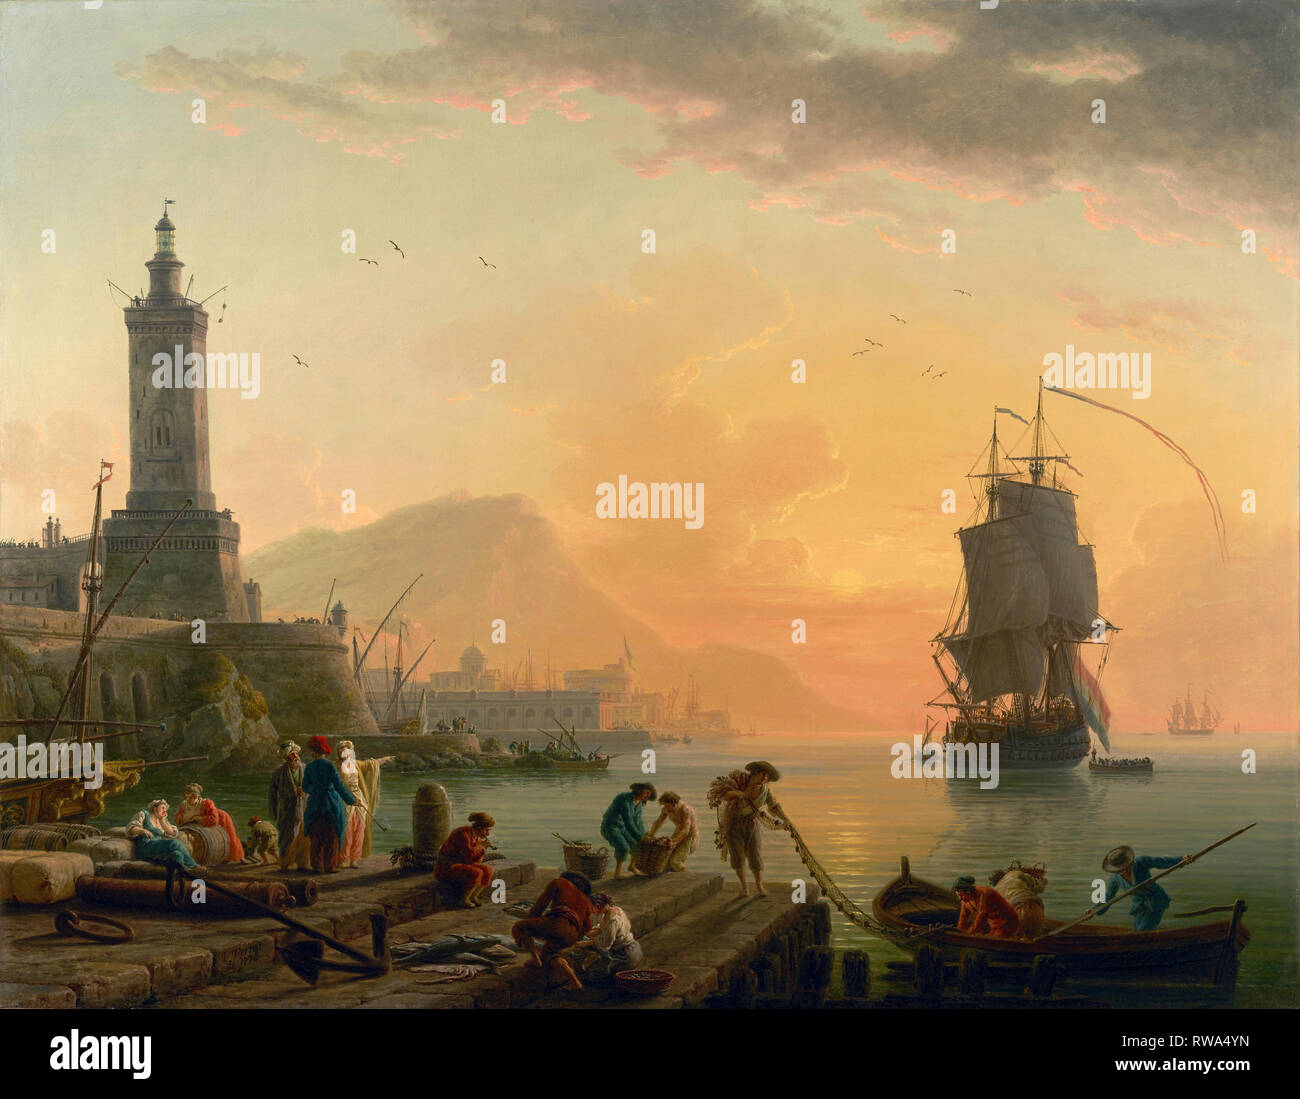 A Calm at a Mediterranean Port; Claude-Joseph Vernet (French, 1714 - 1789); 1770; Oil on canvas; 113 x 145.7 cm (44 1/2 x 57 3/8 in.); 2002.9.2Digital Stock Photo